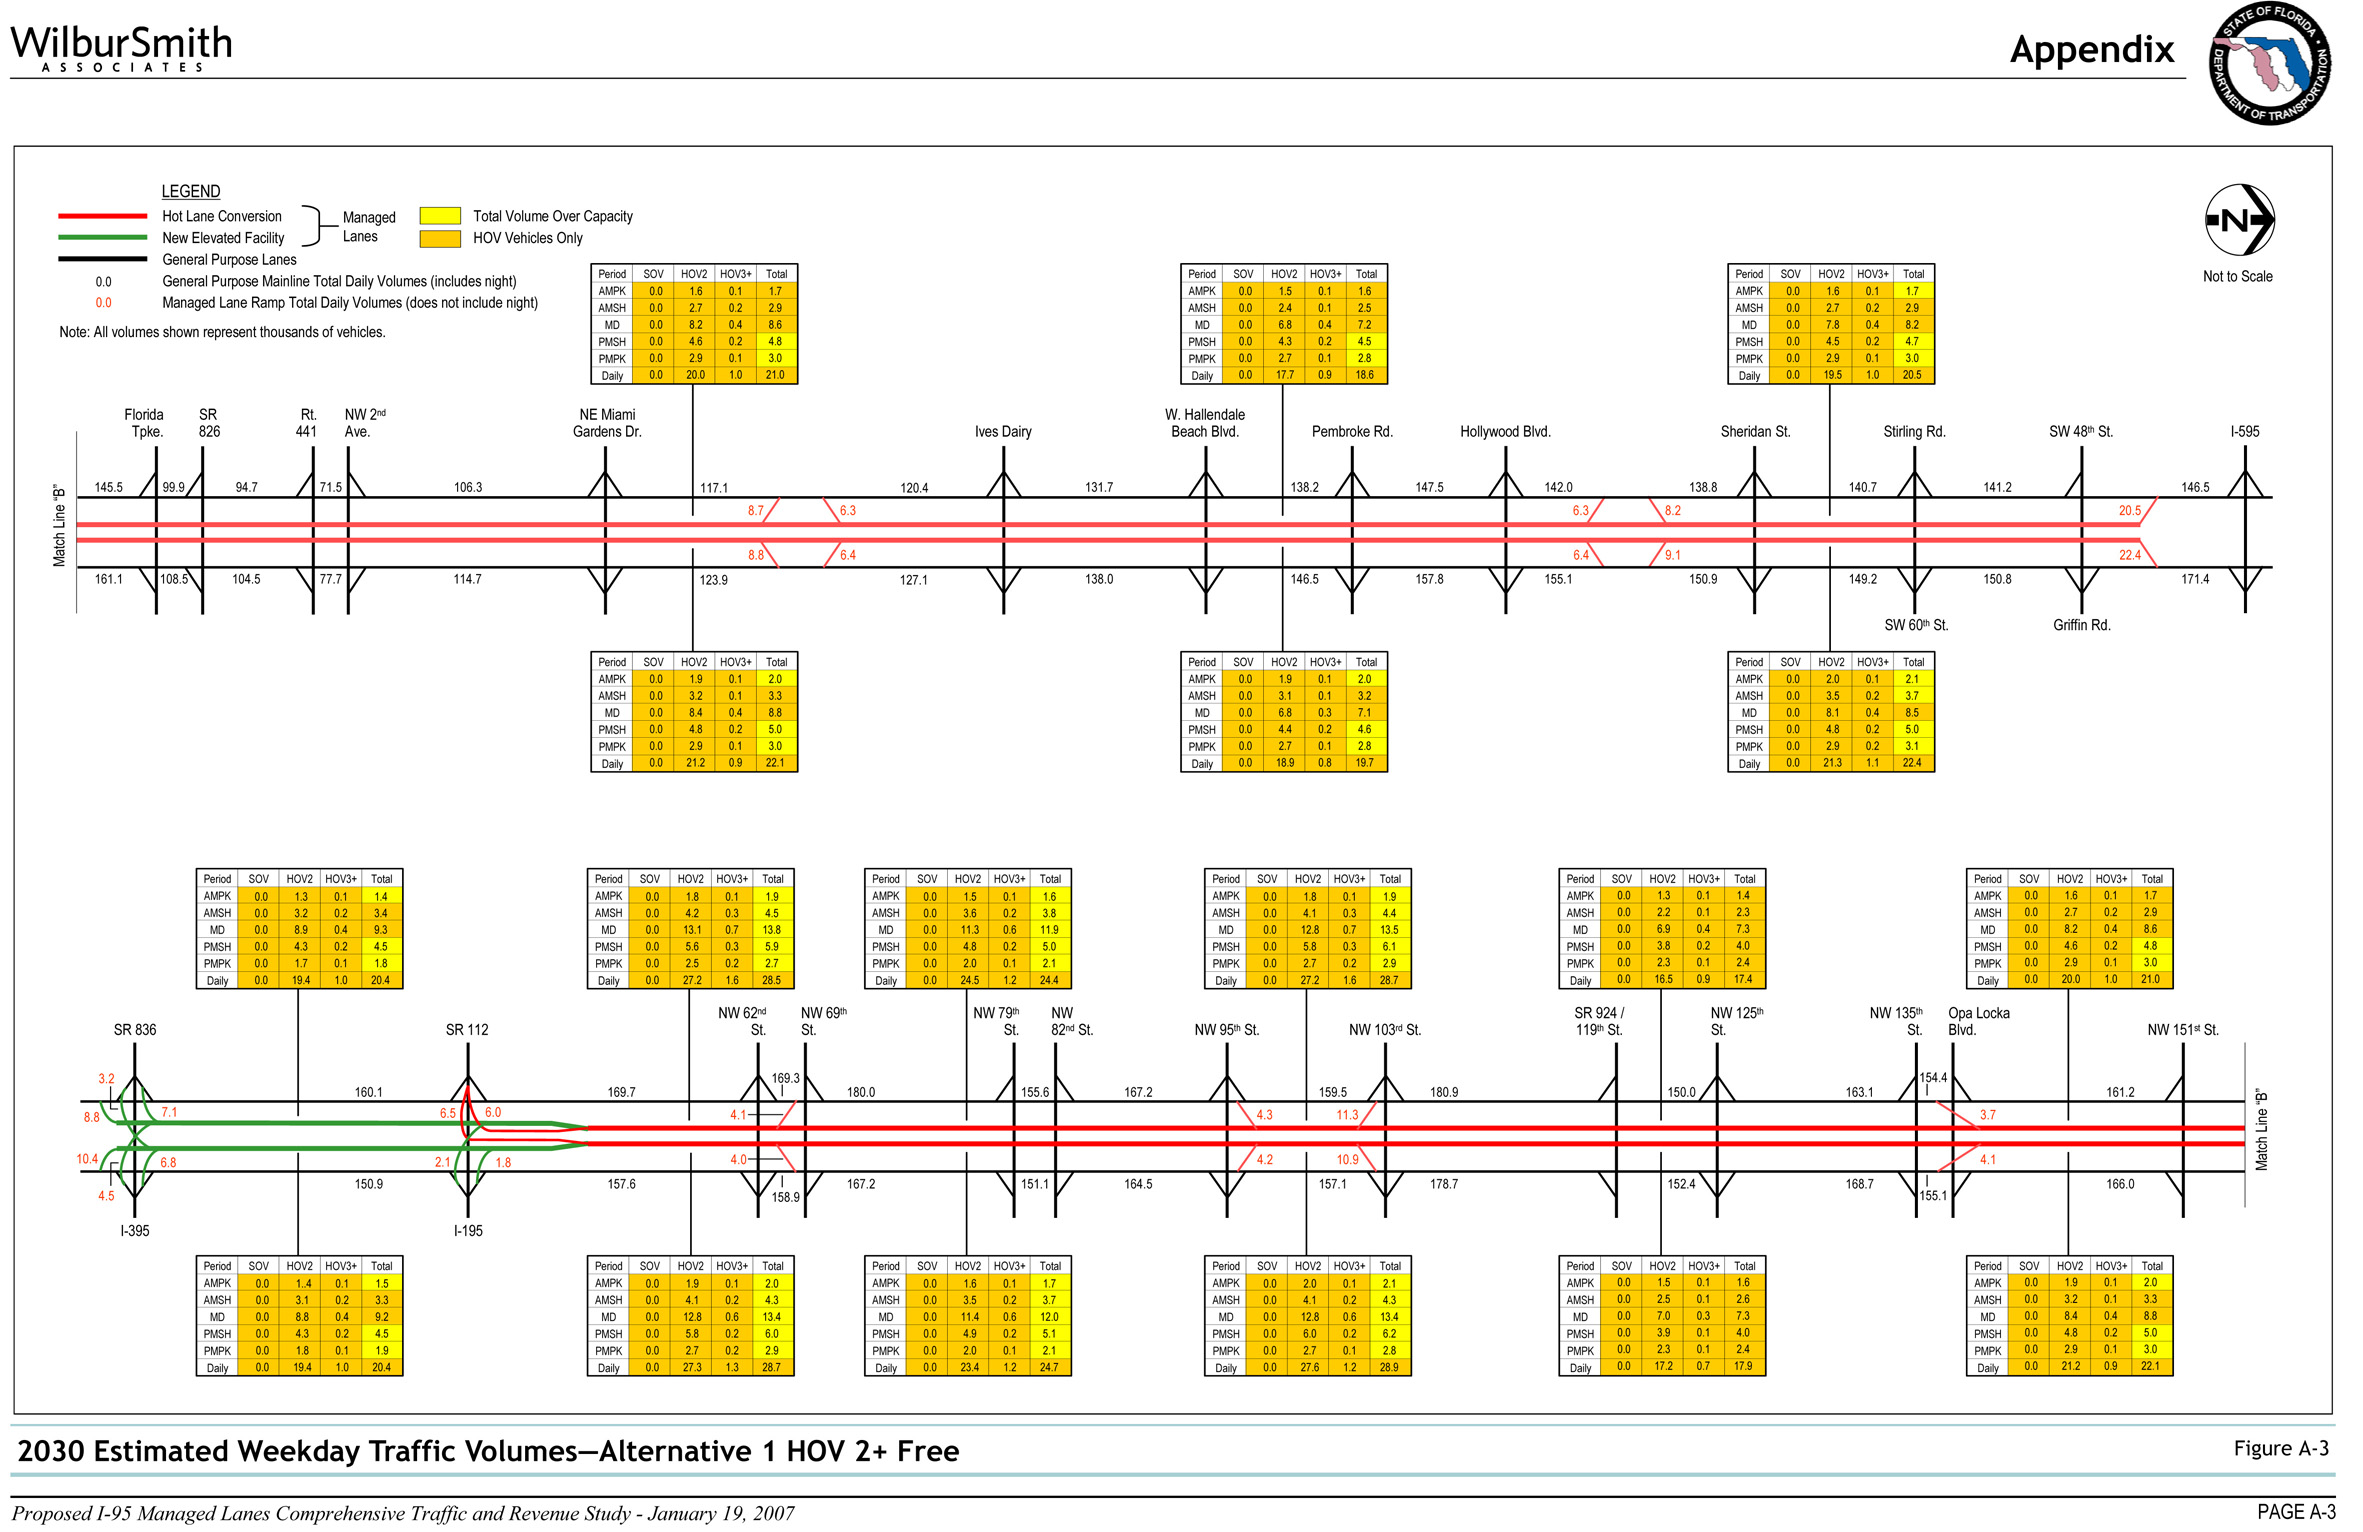 Figure A-3 2030 Estimated Weekday Traffic Volumes - Alternative 1 HOV 2+ Free